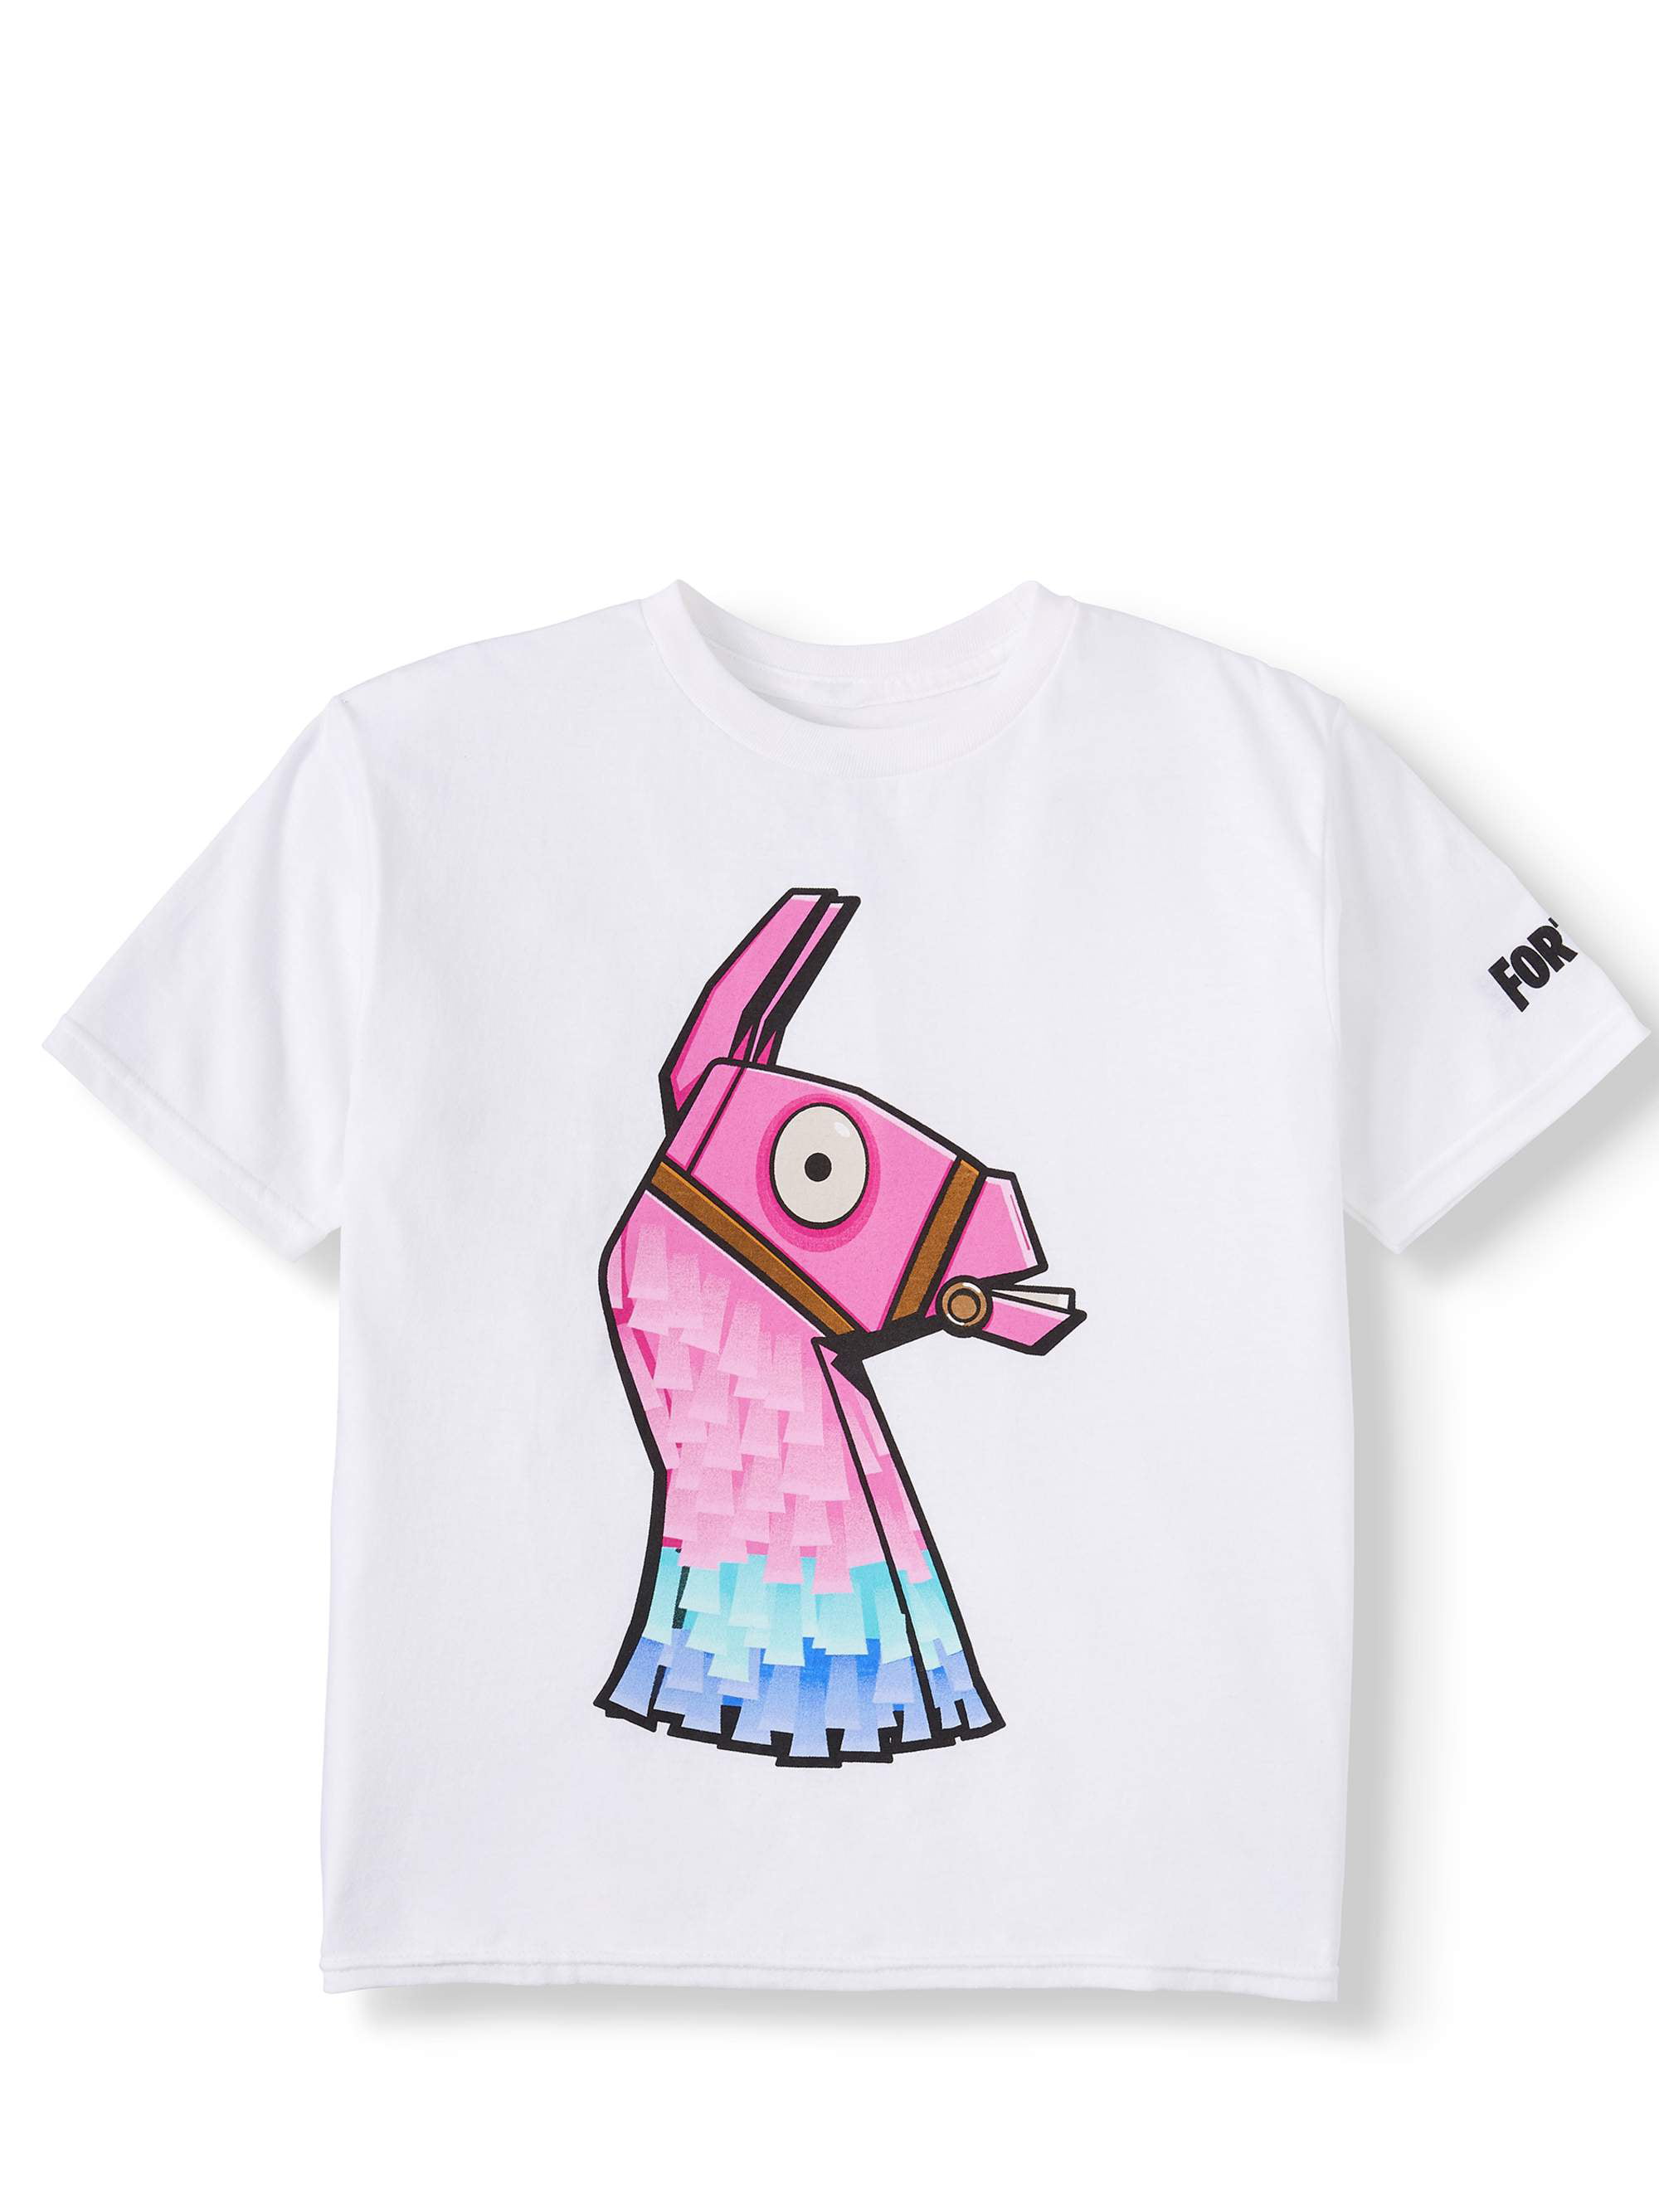 Dab Emote Inspired T-shirt Kids Boys Girls Teen Gaming Tee Gift Battle Royale 